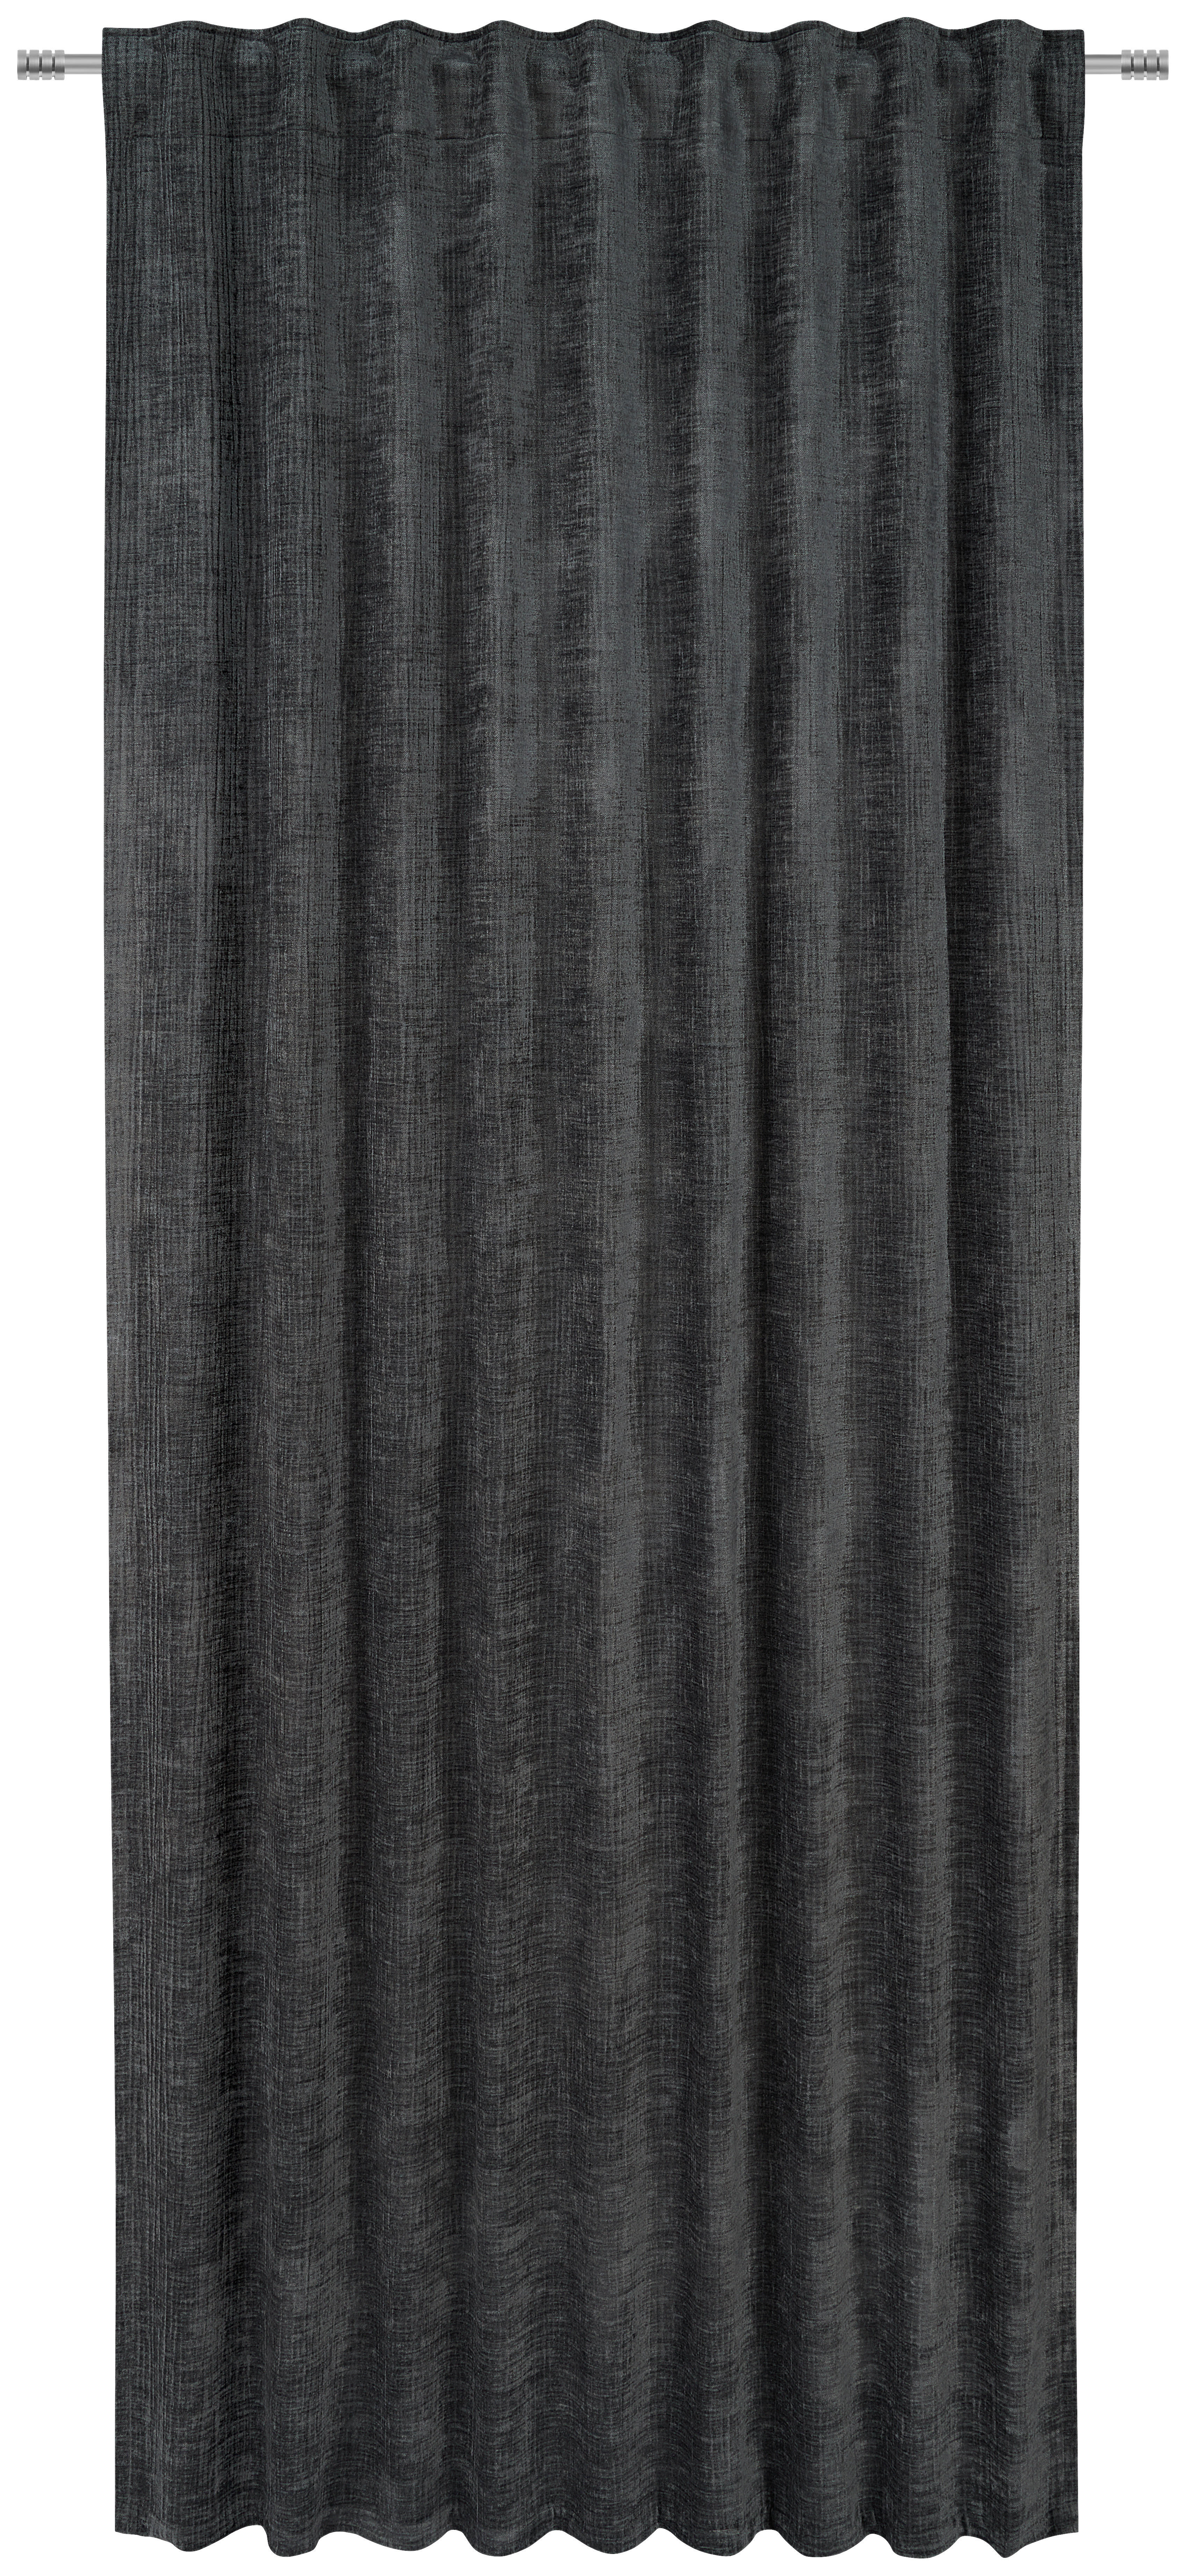 WÄRMESCHUTZVORHANG  blickdicht  145/245 cm   - Anthrazit, Basics, Textil (145/245cm) - Esposa